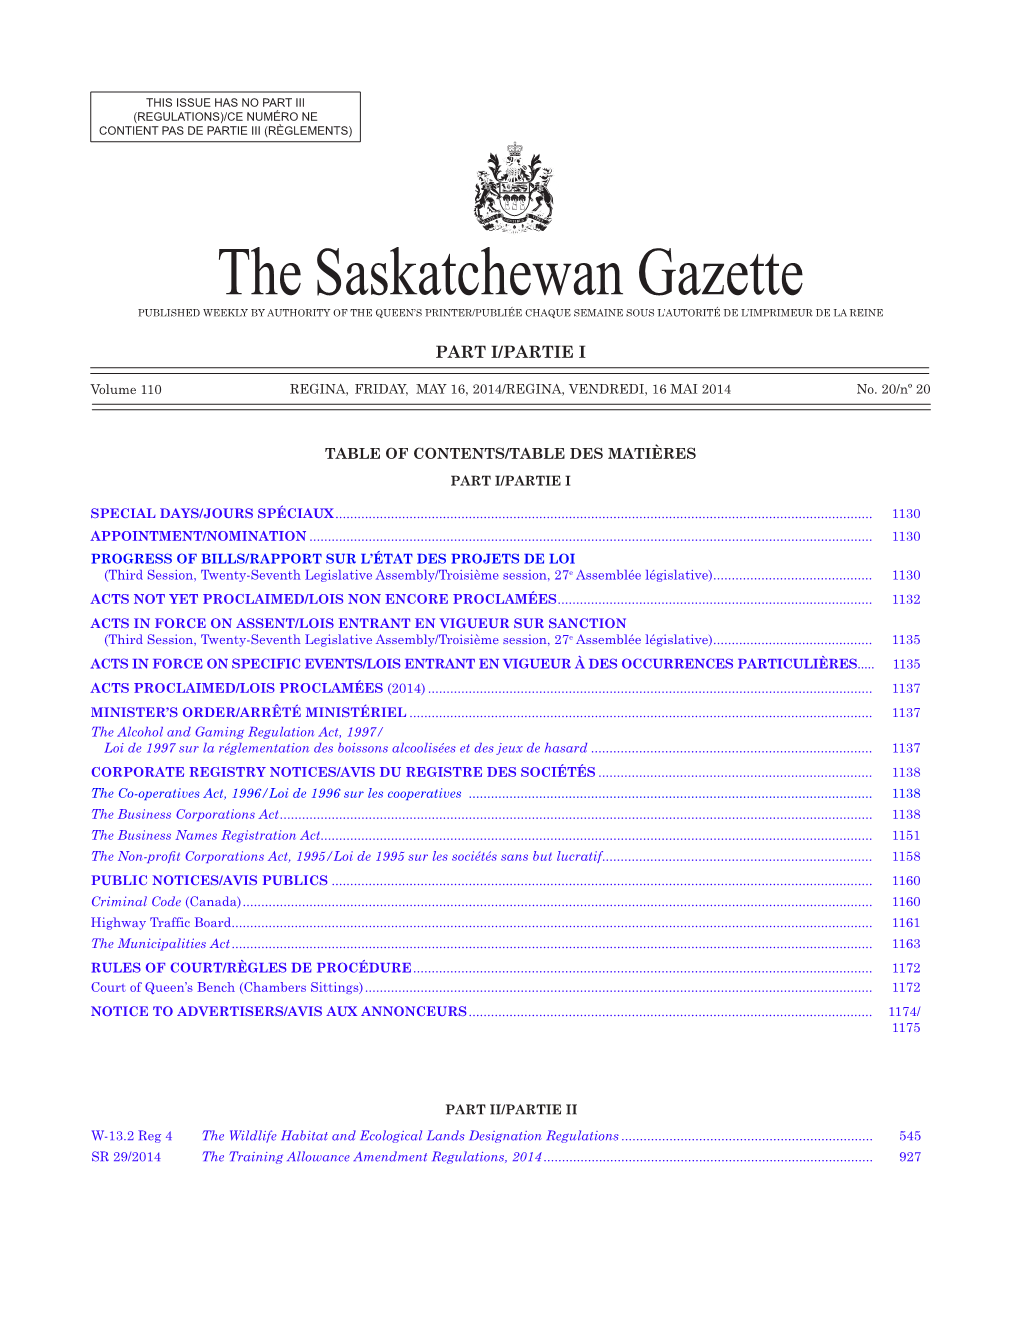 Saskatchewan-Electronic Interception